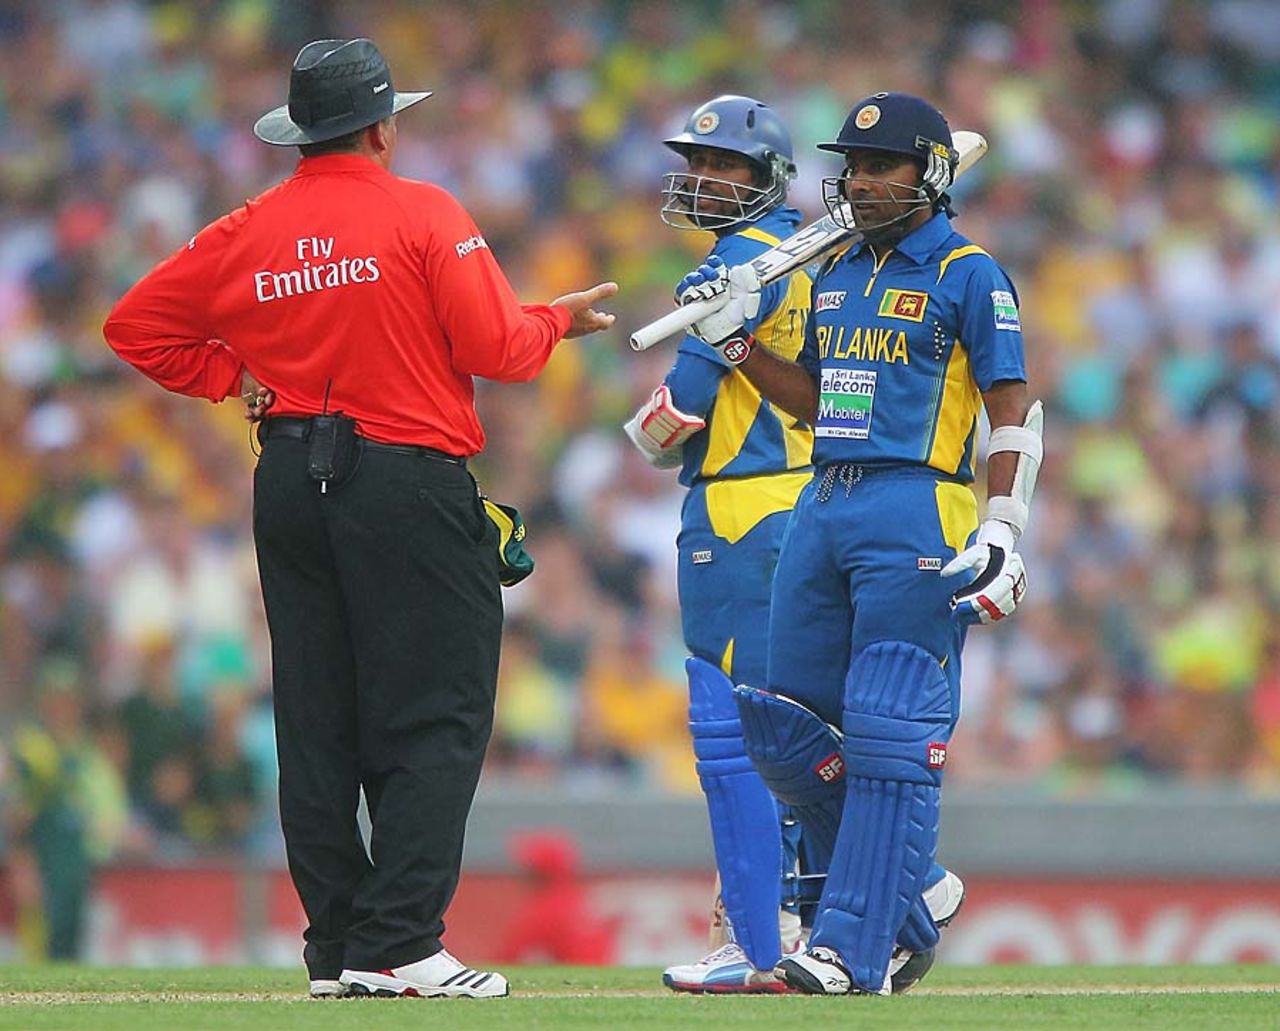 Rain forced Sri Lanka's chase to be halted, before the match was eventually called off, Australia v Sri Lanka, 4th ODI, Sydney, January 20, 2013